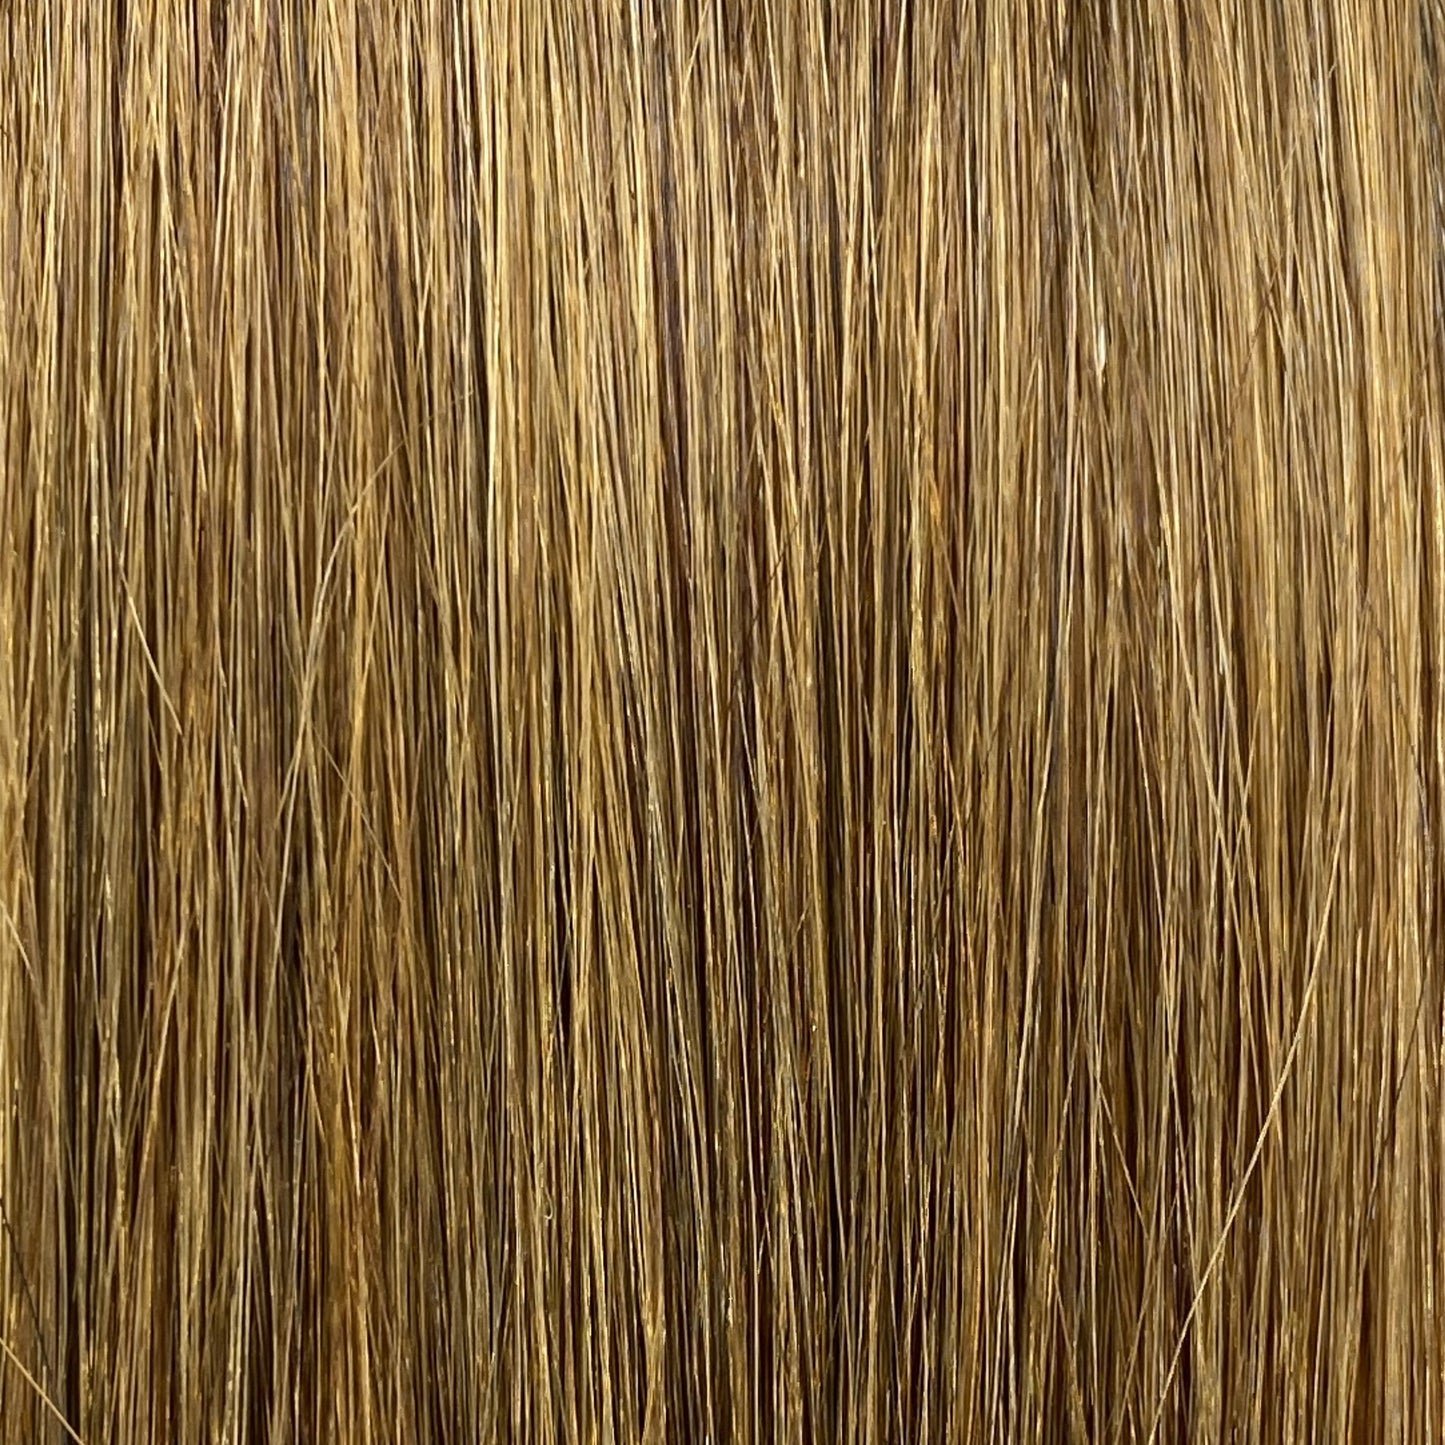 Fusion hair extensions #10 - 40cm/16 inches - Dark Ash Blonde Fusion Euro So Cap 